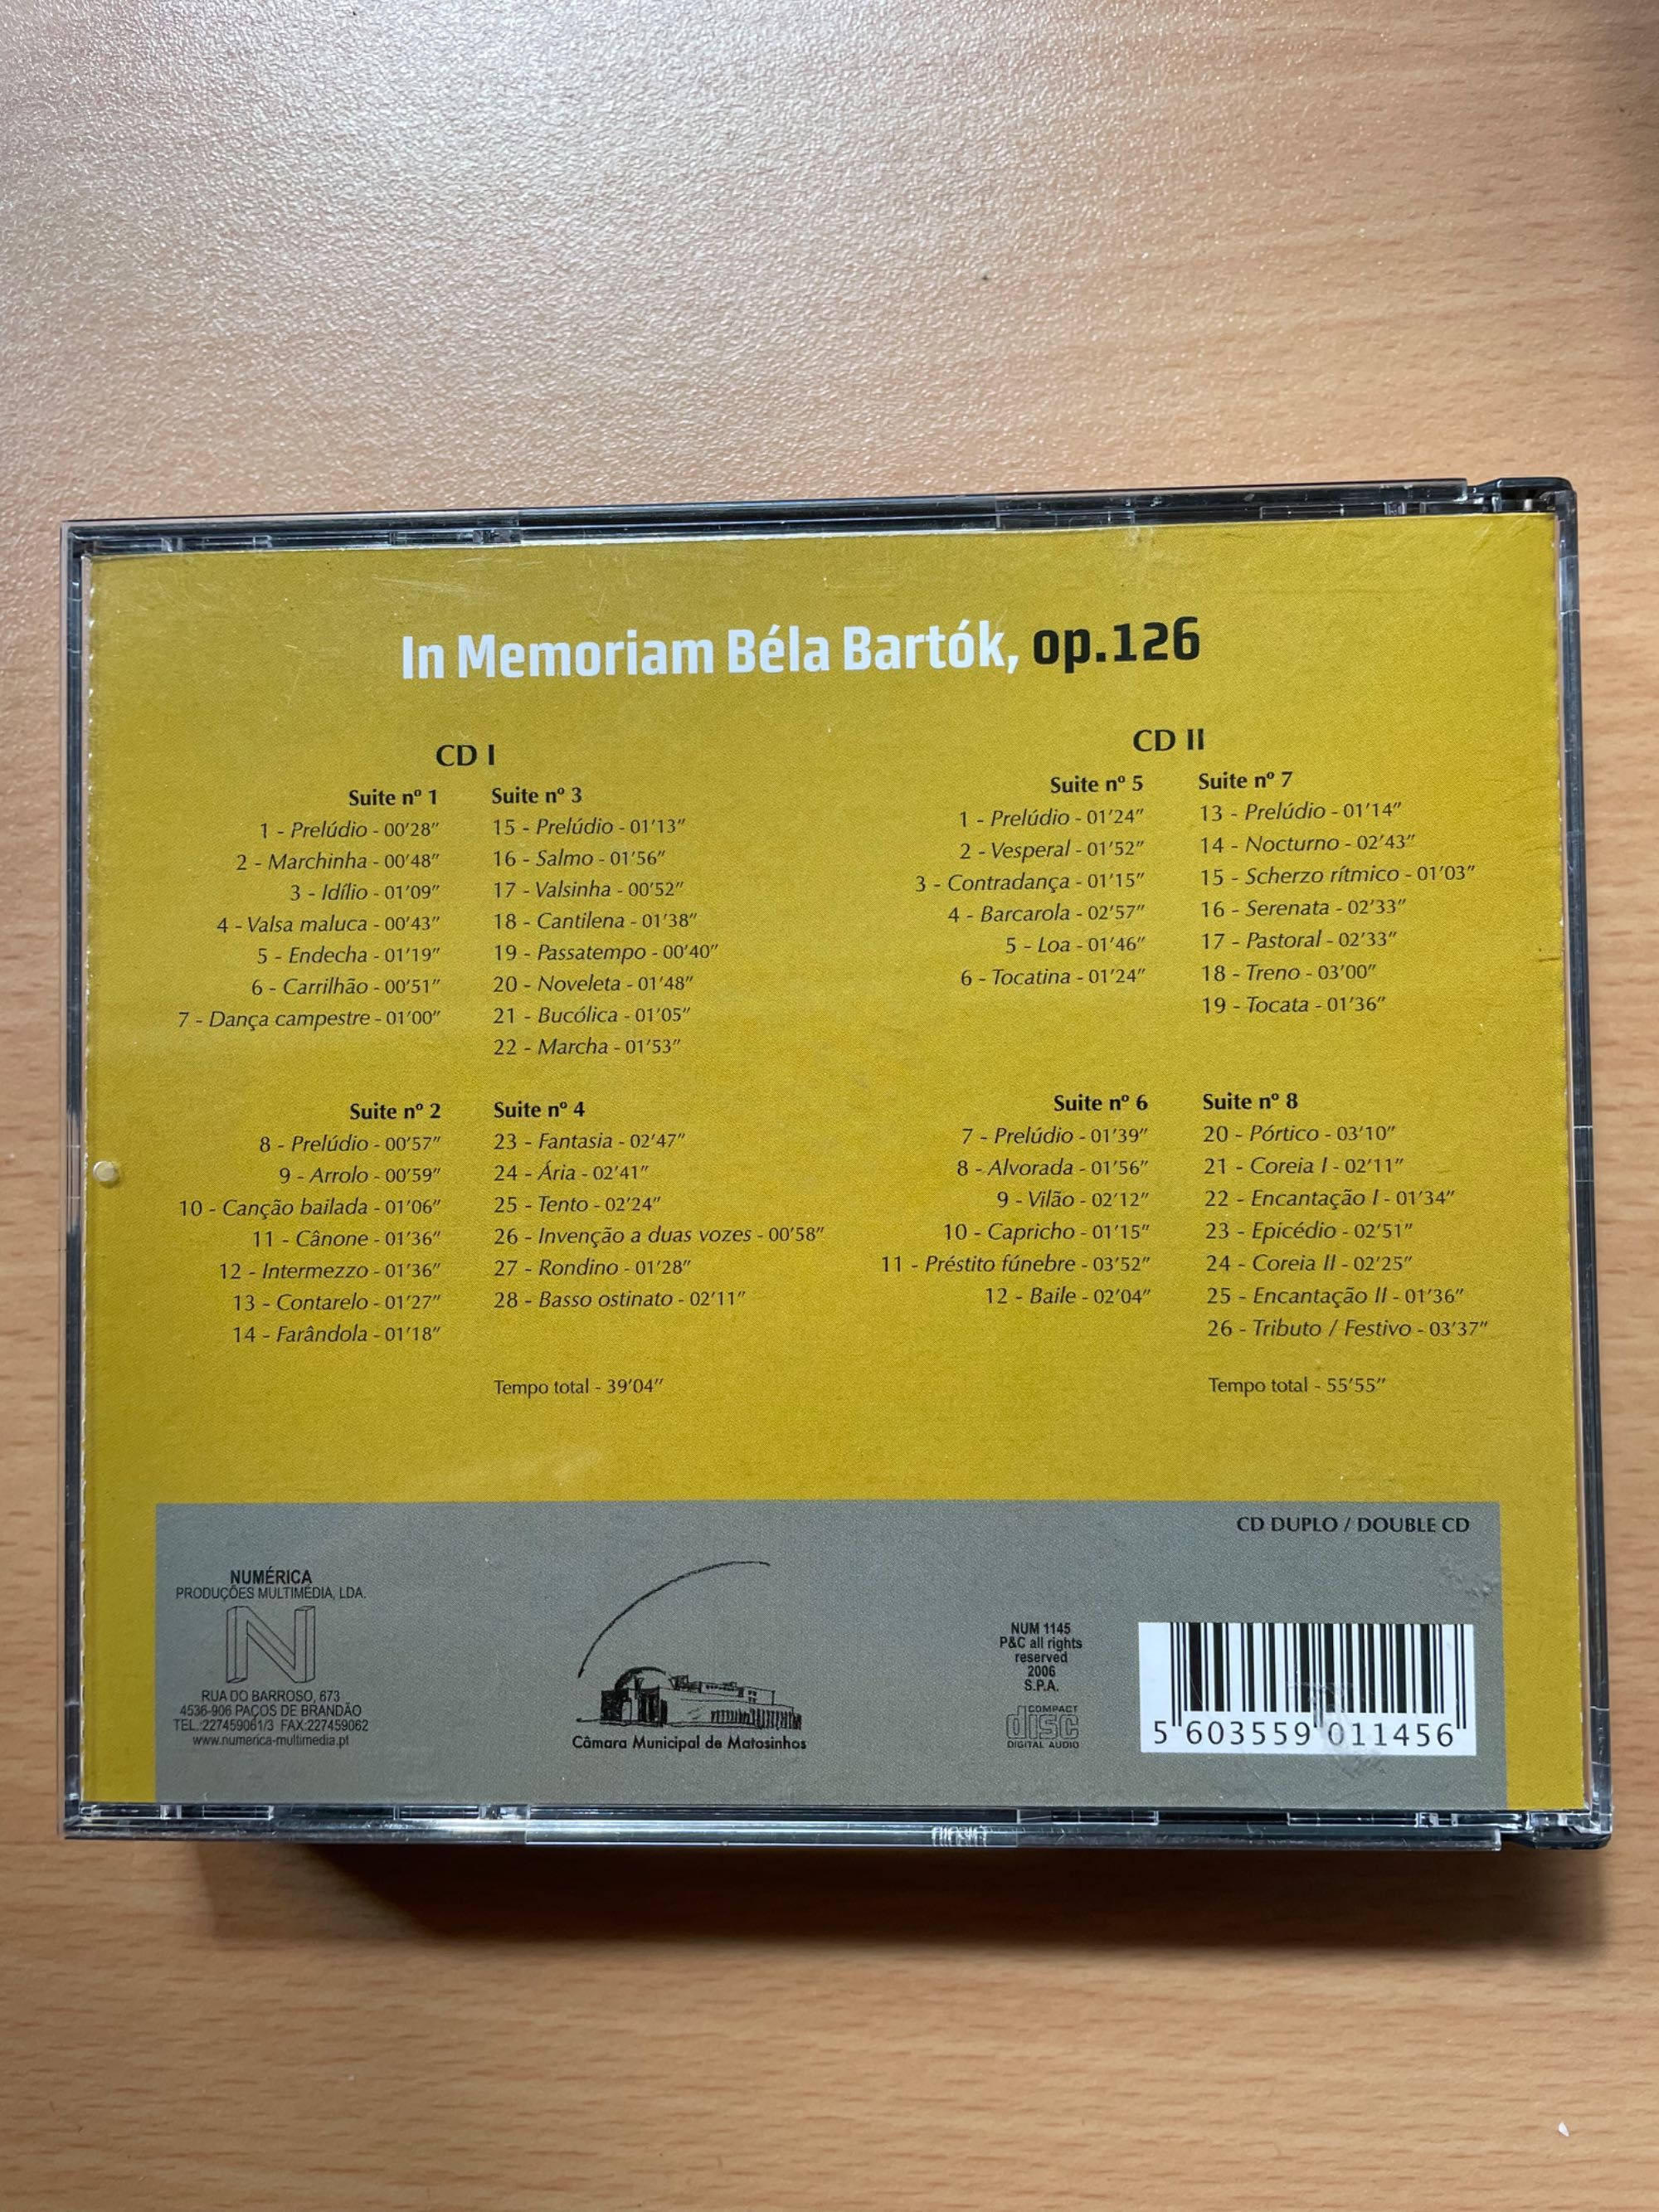 CD duplo In Memoriam Béla Bartók - Lopes-Graça, Rosado.